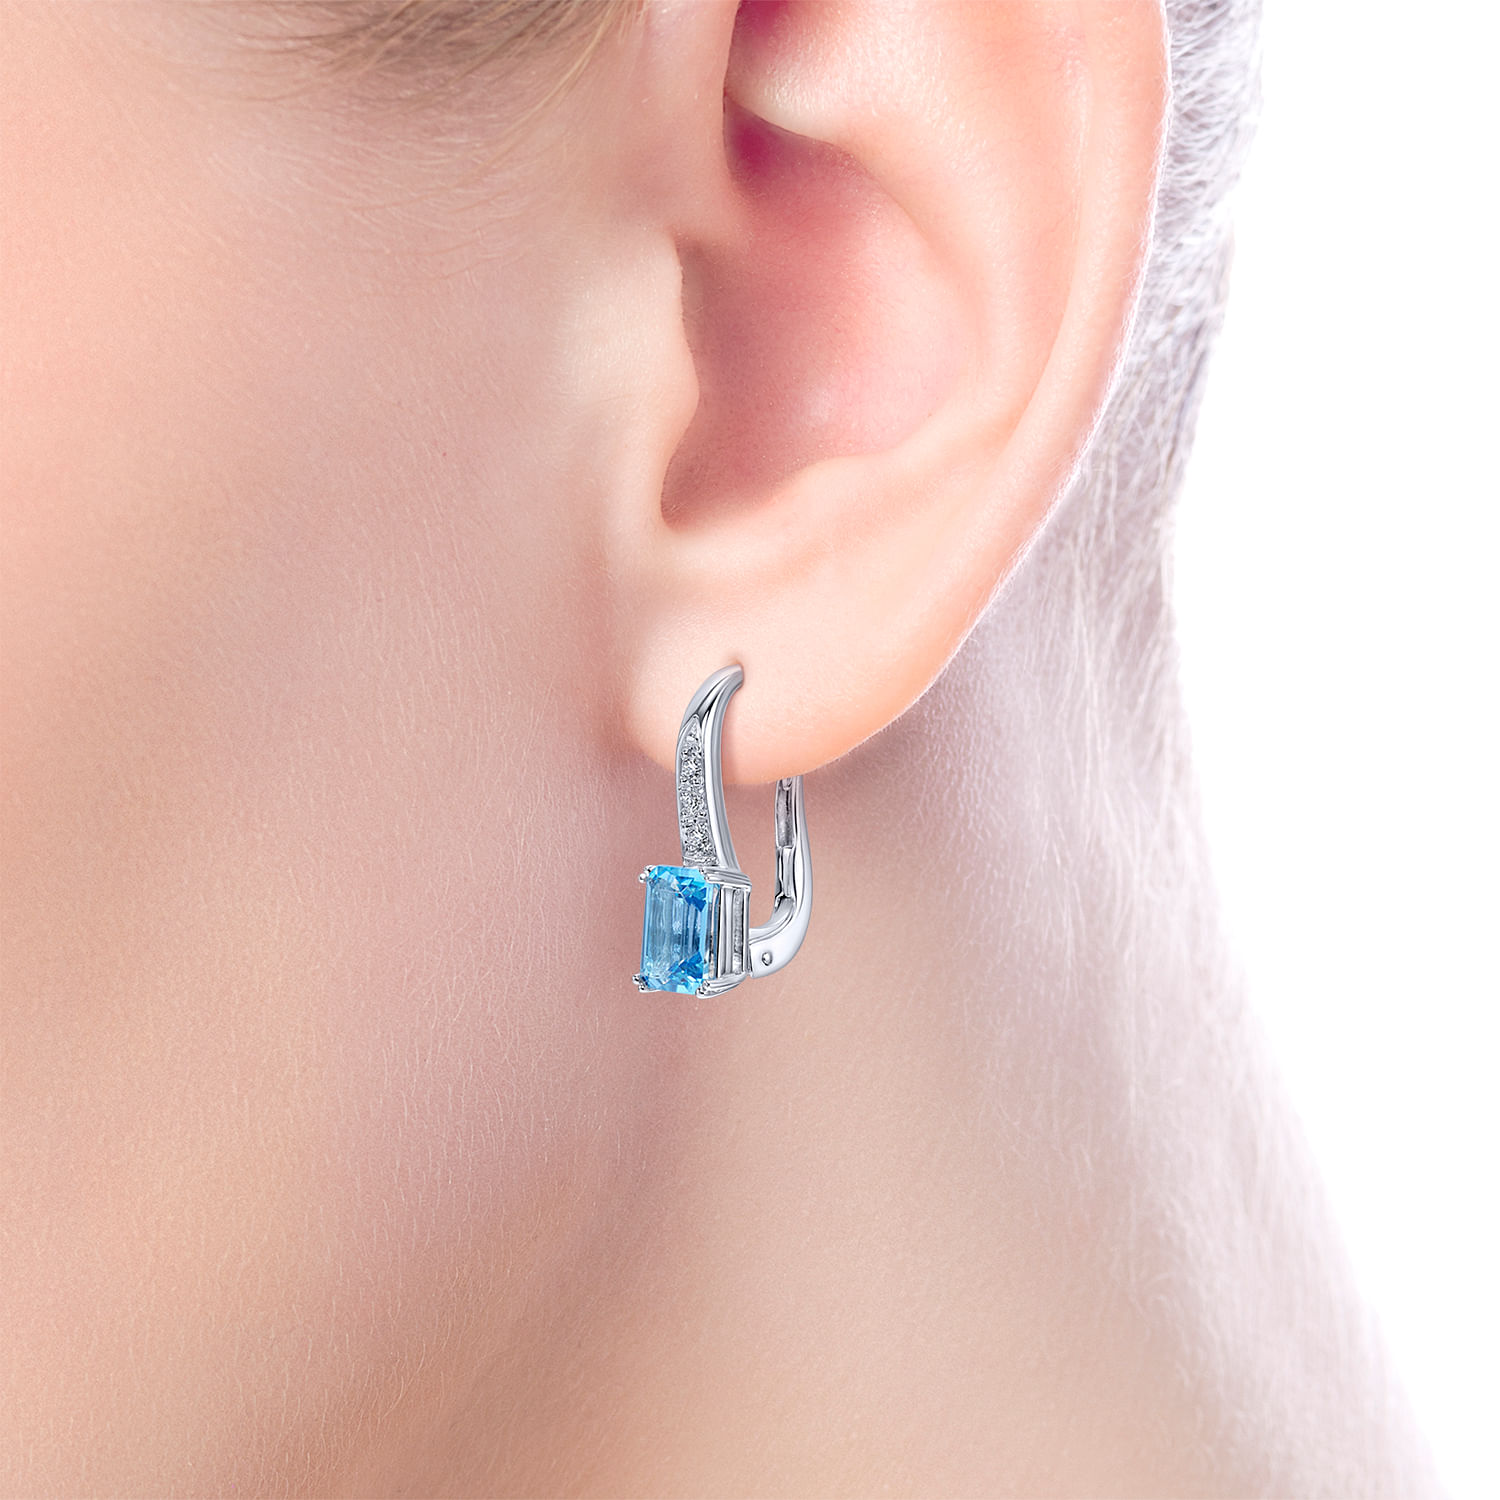 14K White Gold Diamond and Swiss Blue Topaz Drop Earrings